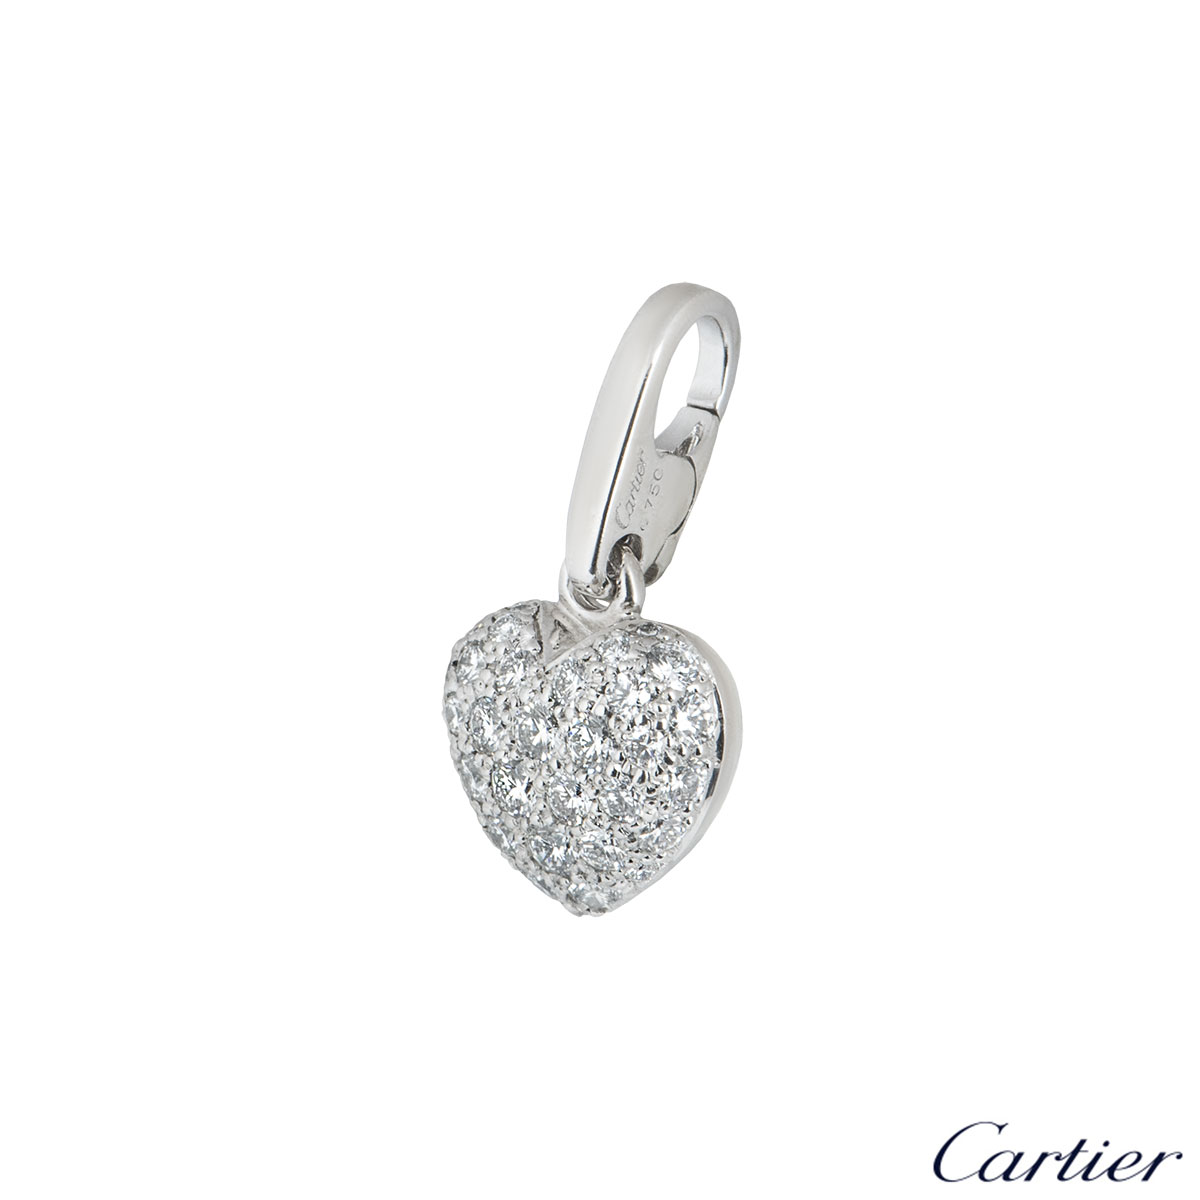 Cartier White Gold Pave Diamond Heart Charm | Rich Diamonds